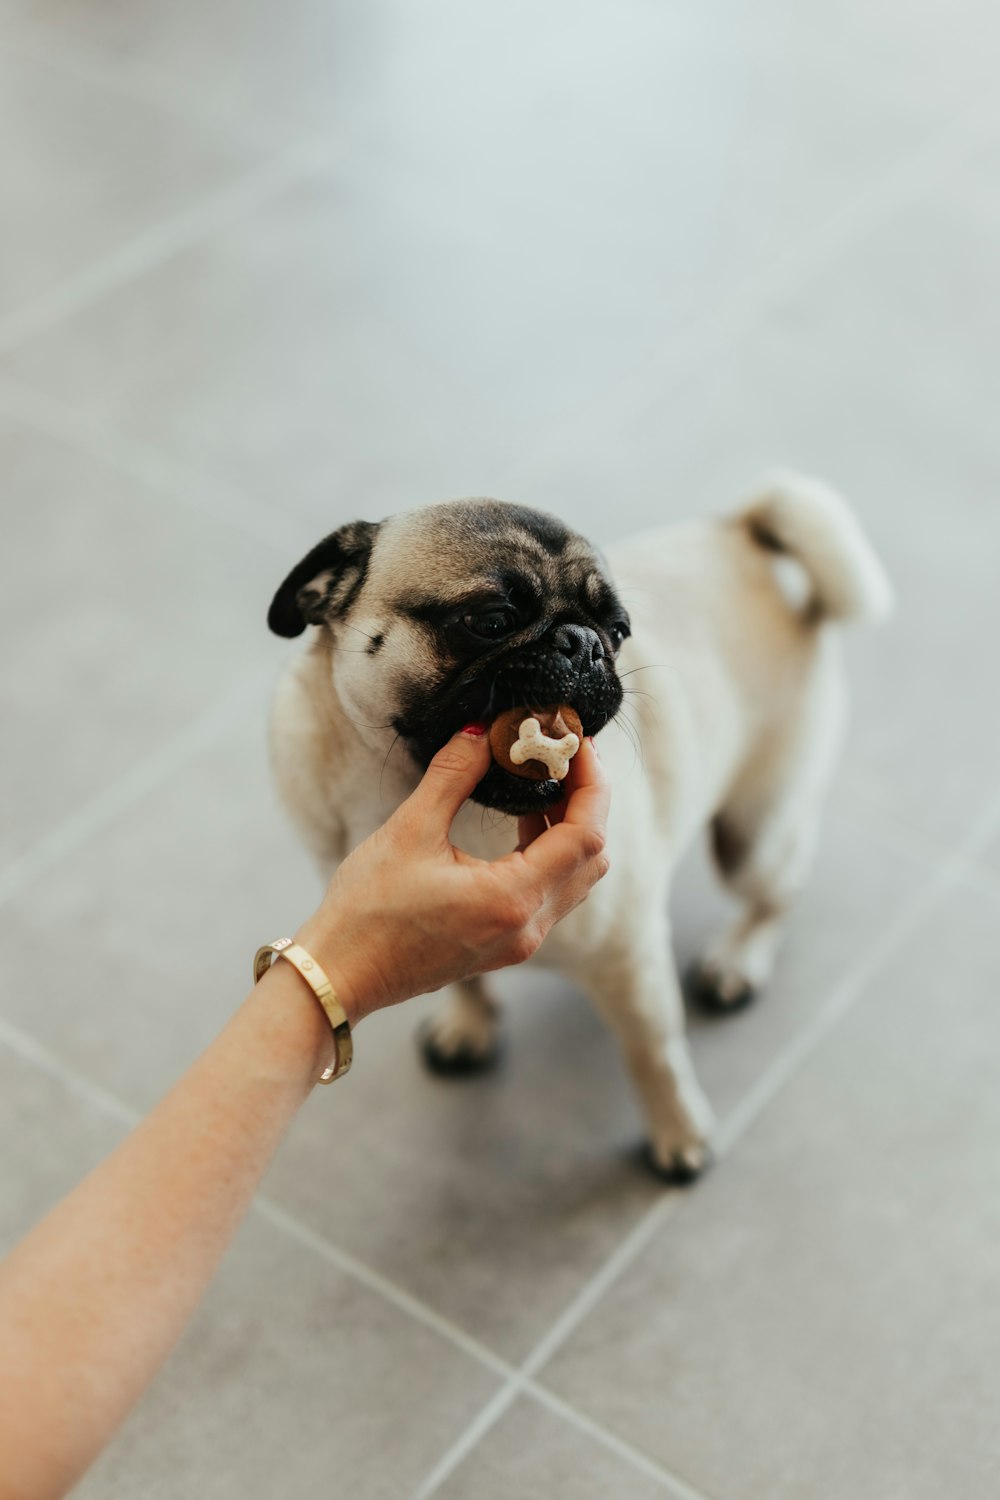 a person feeding a small pug a piece of food